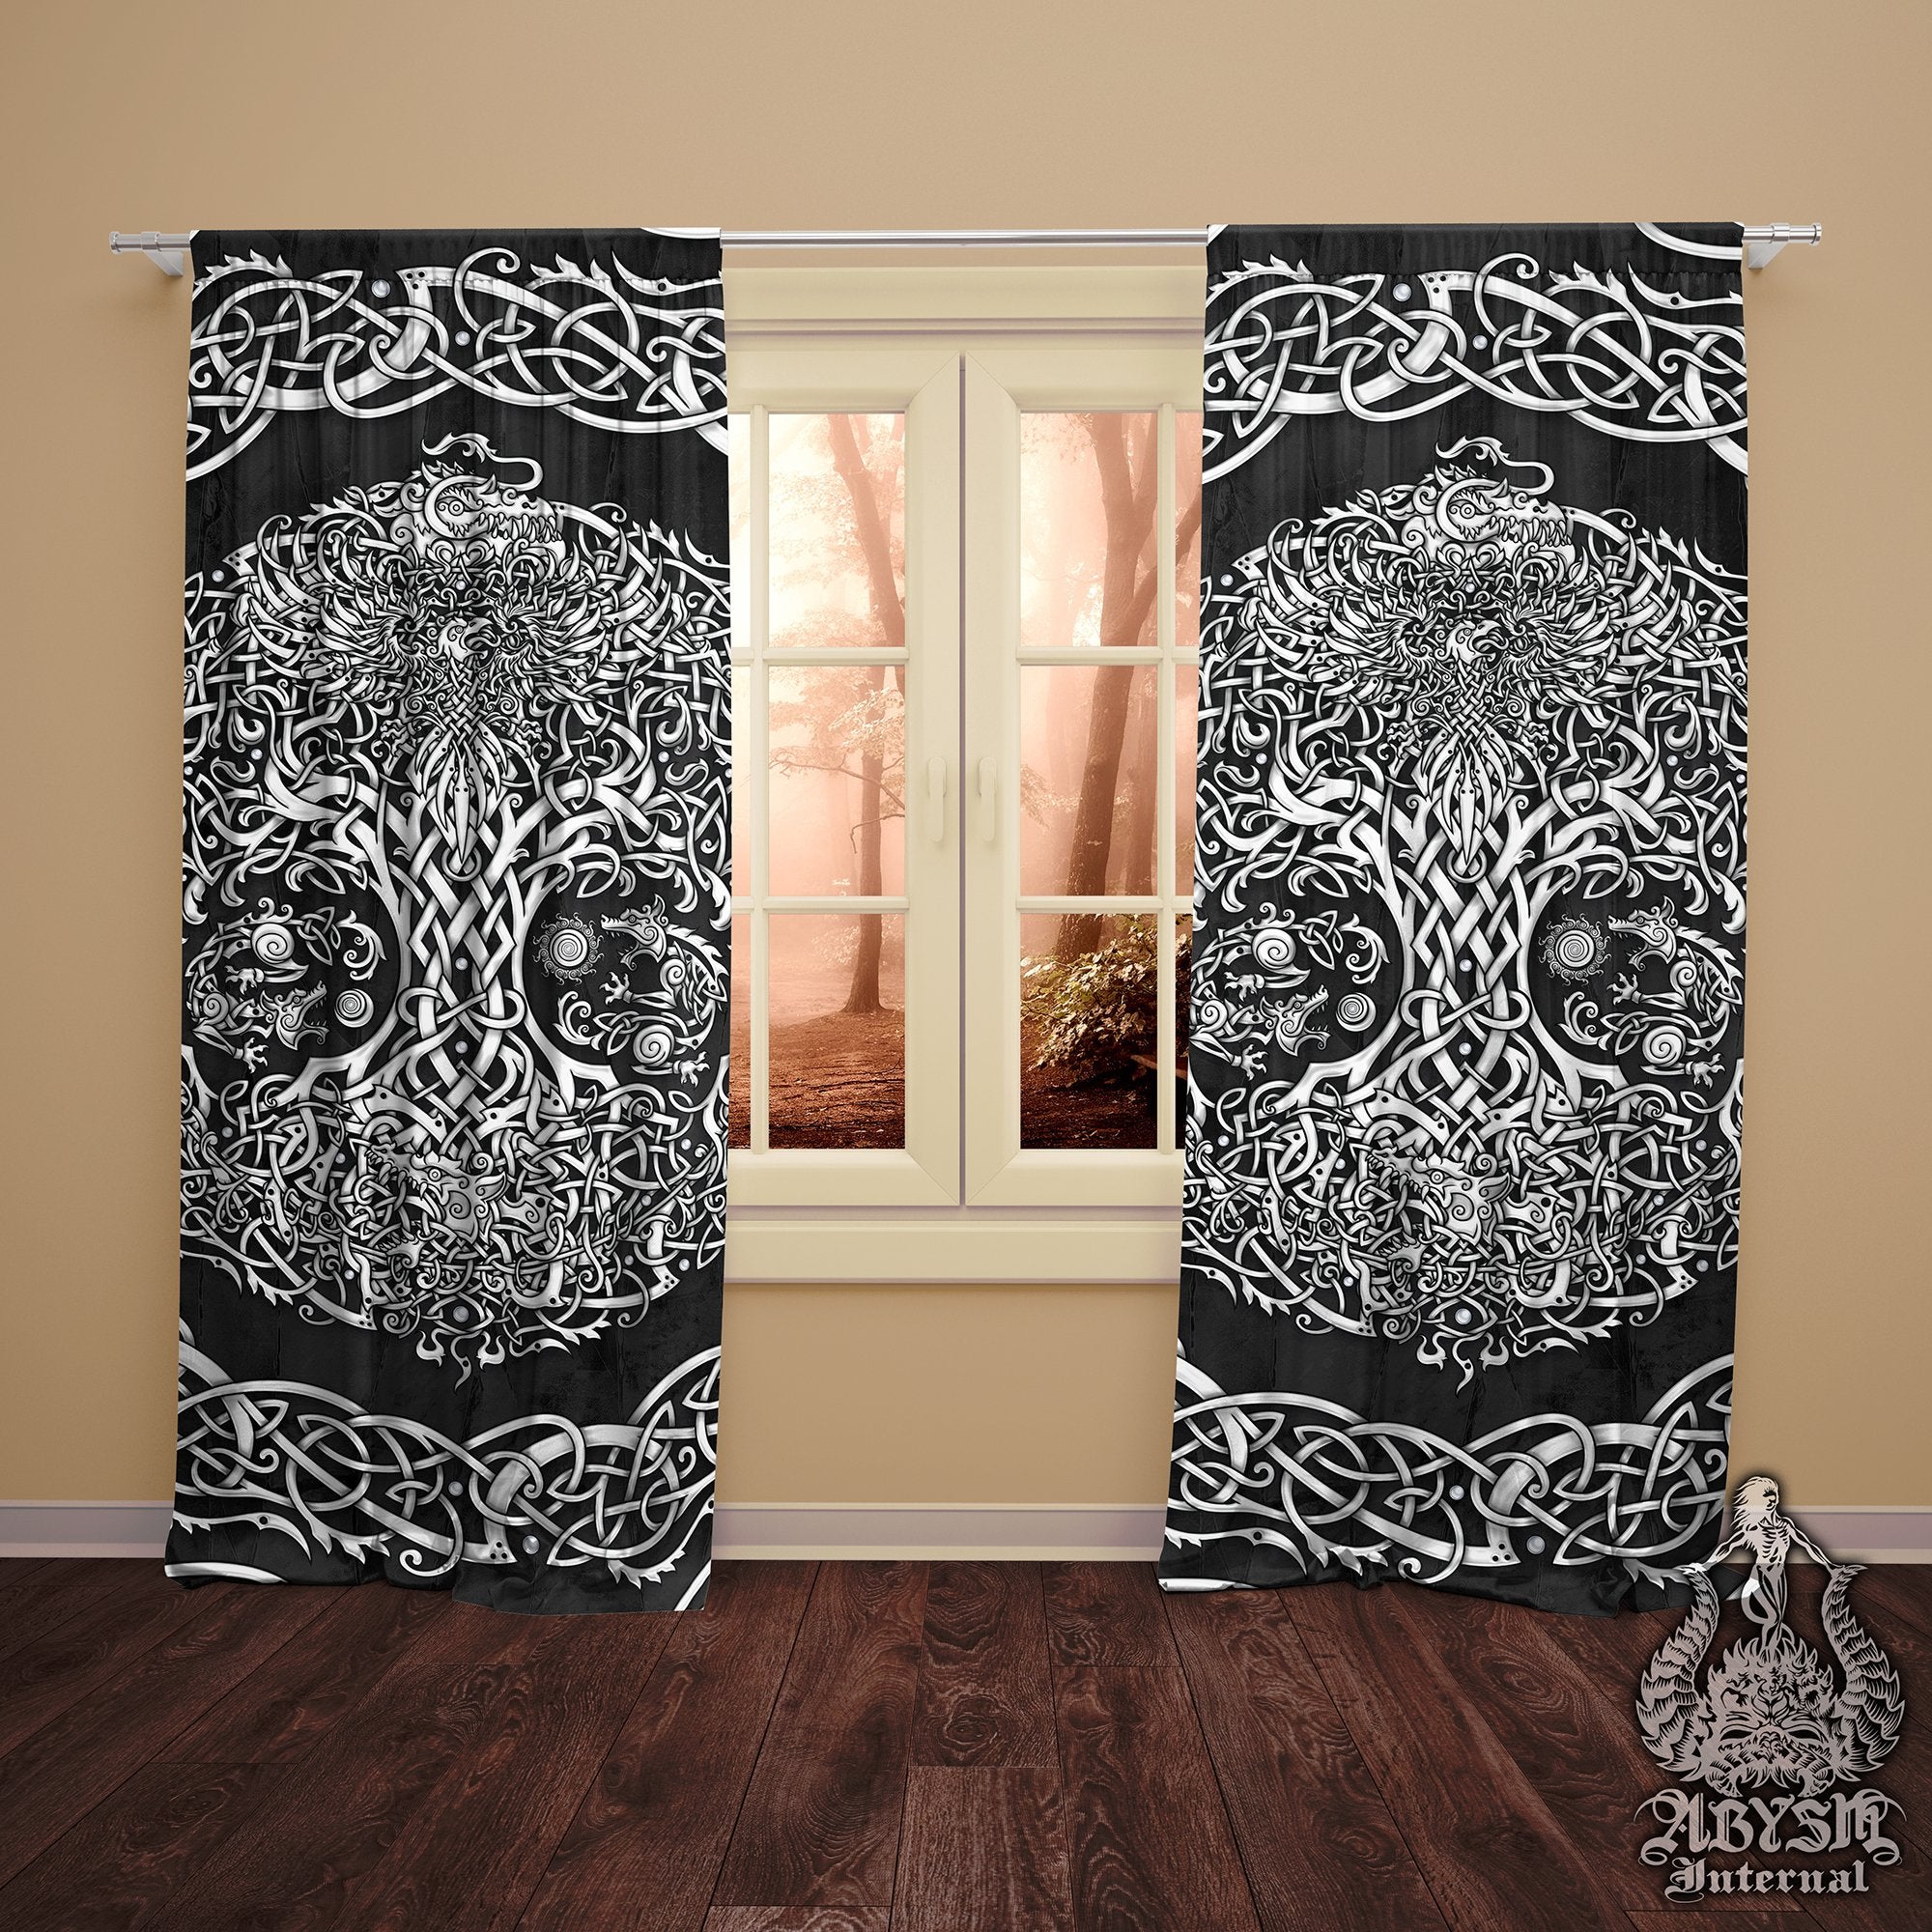 Viking Curtains, 50x84' Printed Window Panels, Yggdrasil, Nordic Tree of Life, Pagan Room Decor, Art Print - White and 3 Colors - Abysm Internal